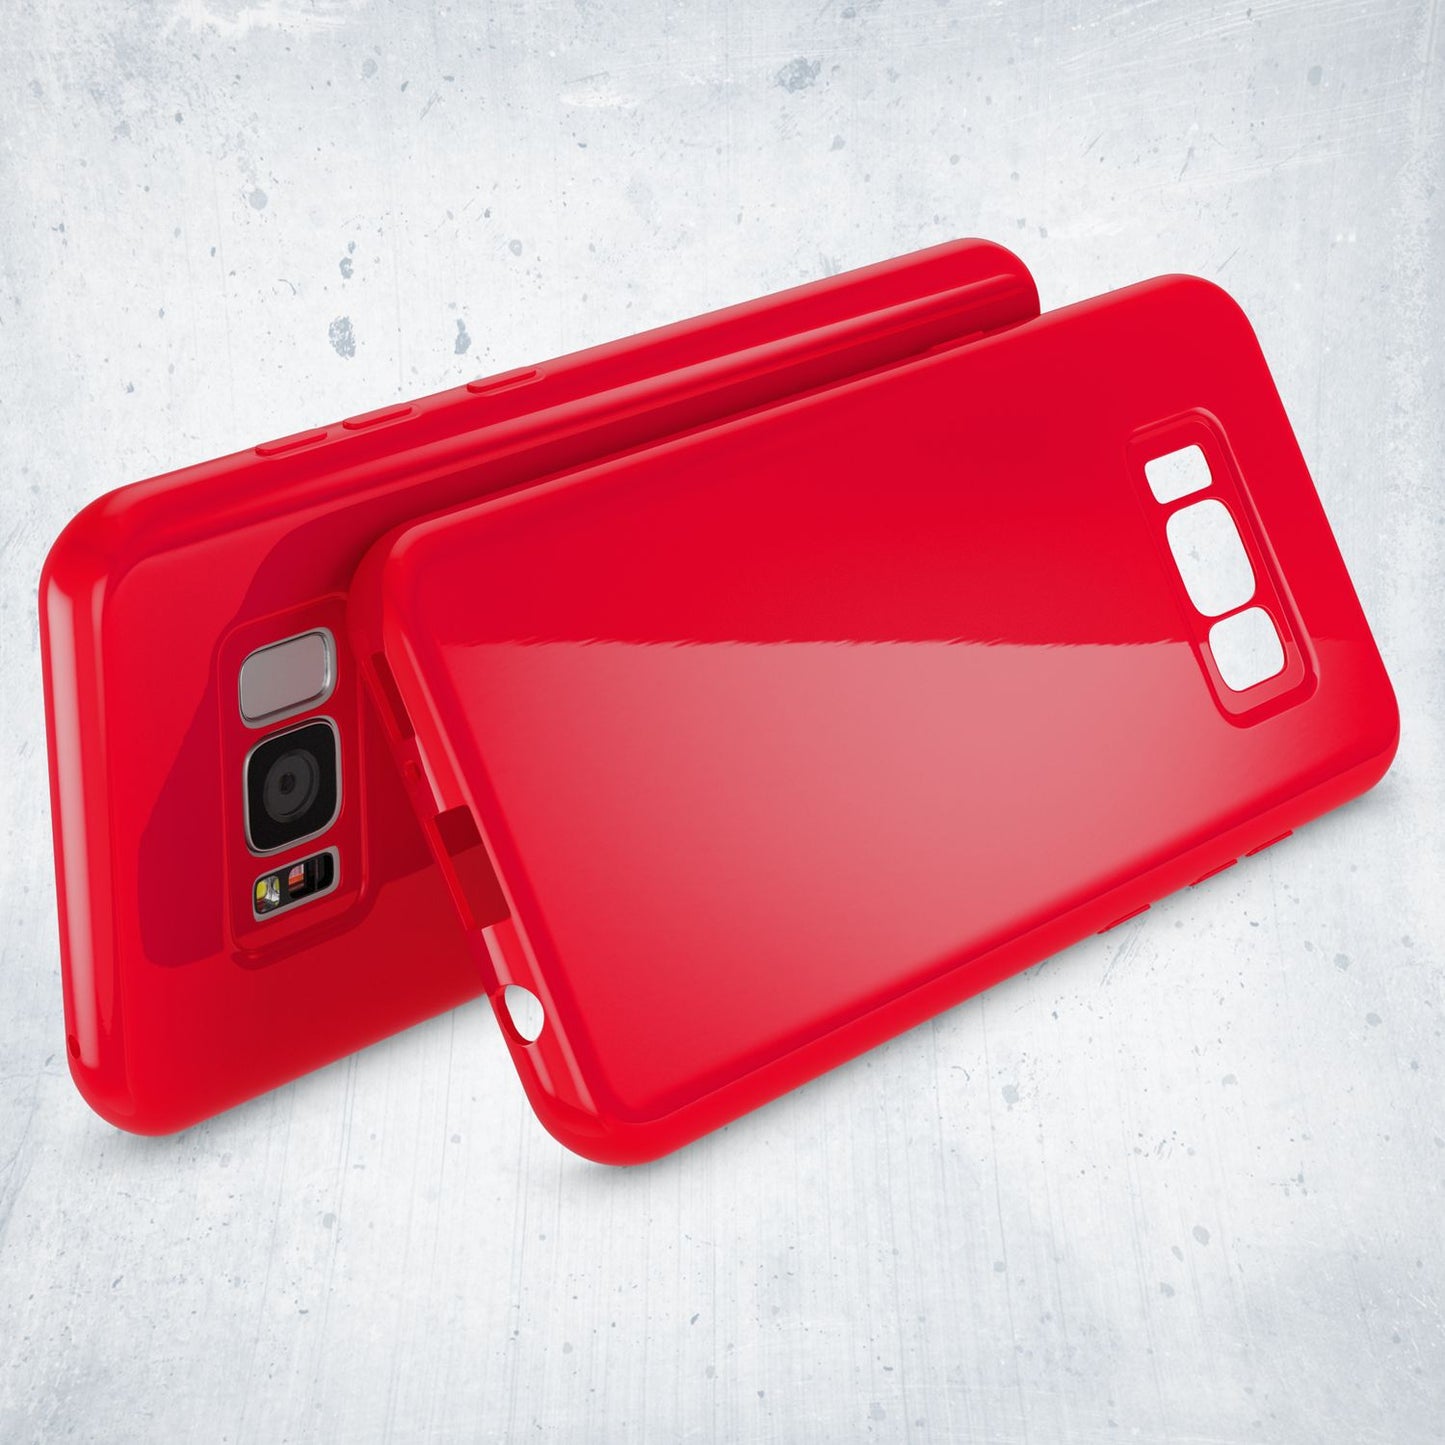 Samsung Galaxy S8 Hülle Handyhülle von NALIA, Slim Silikon Cover TPU Jelly Case